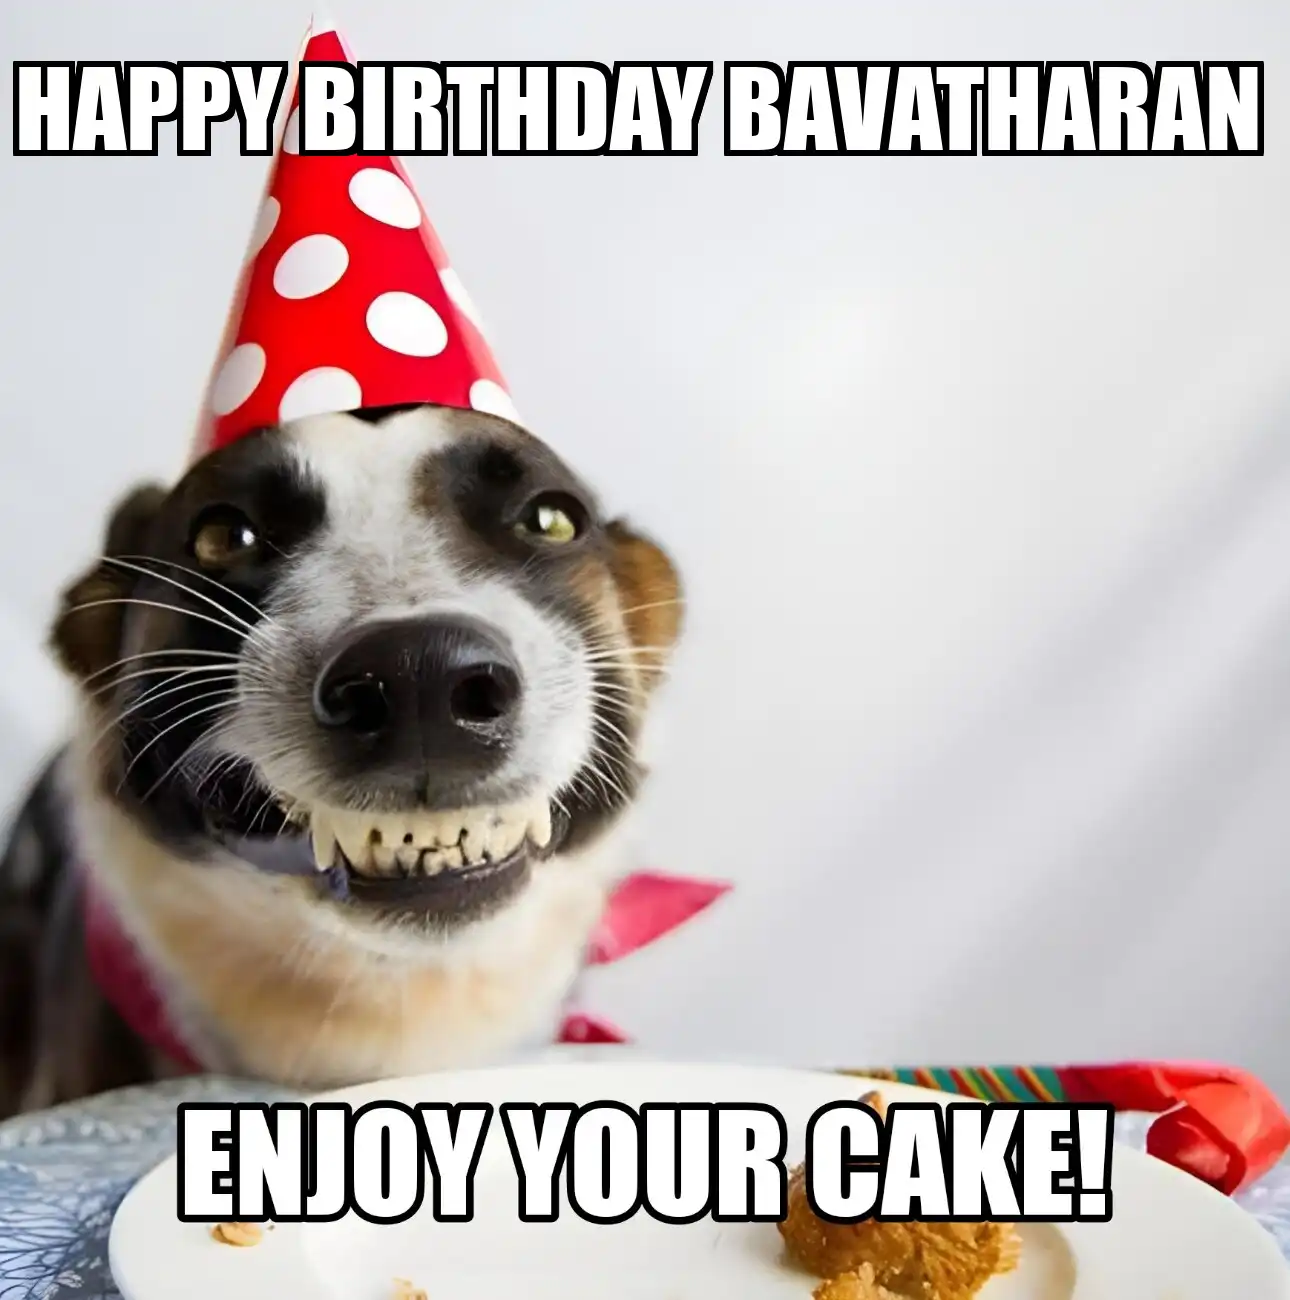 Happy Birthday Bavatharan Enjoy Your Cake Dog Meme